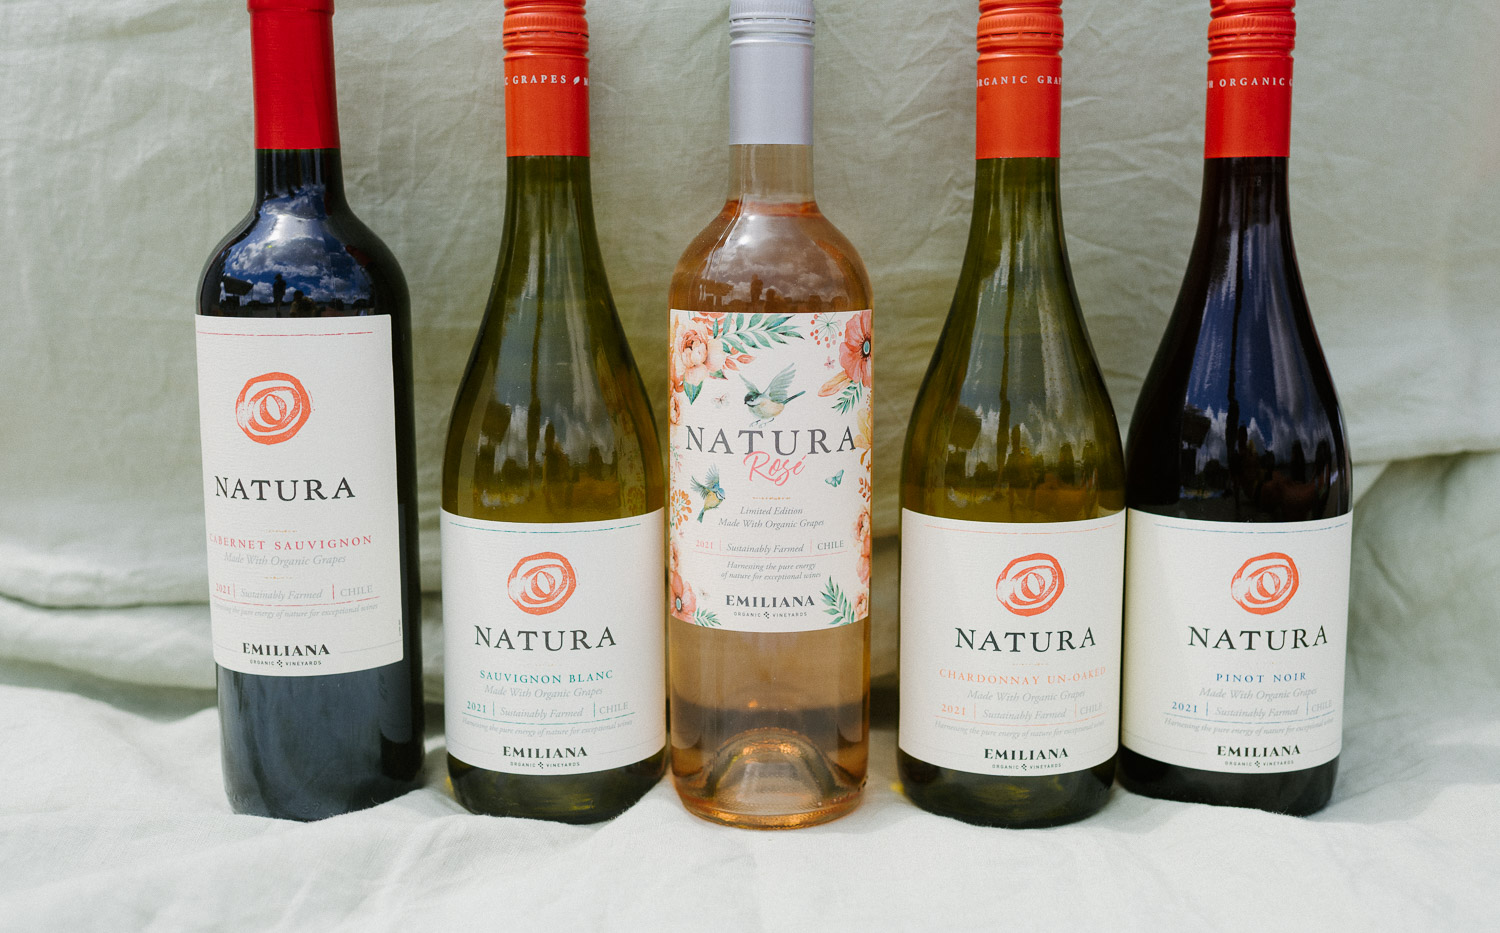 3 Characteristics of Natural Wine